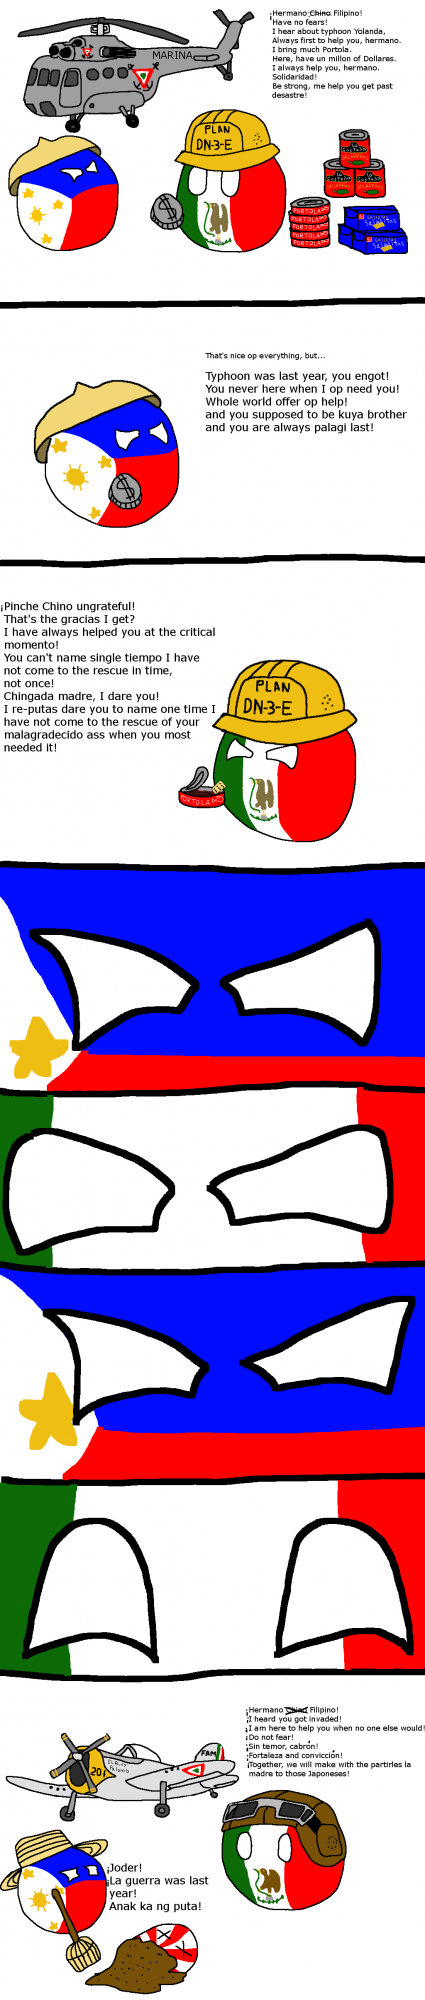 Mexican-Philippine relations (Polandball)